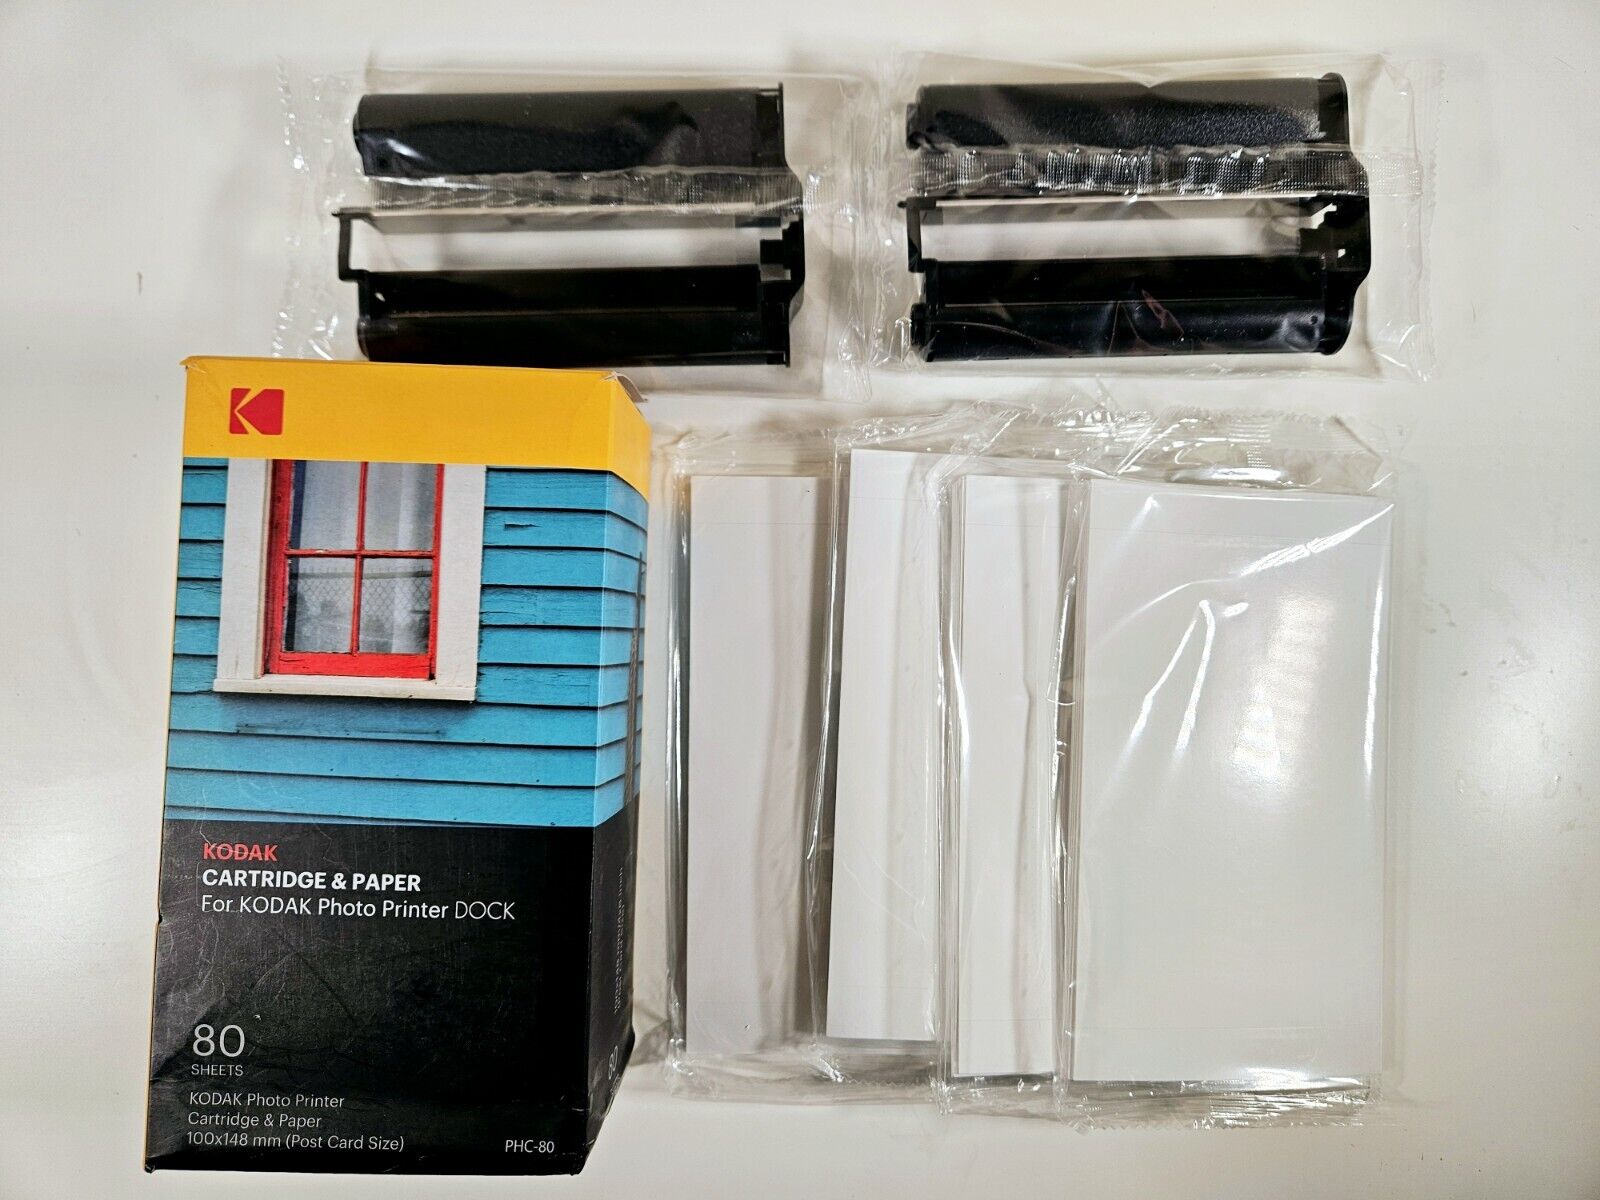 Kodak PHC-80 Photo Printer Cartridge & Paper 80 Sheets 100x148 mm Post Card